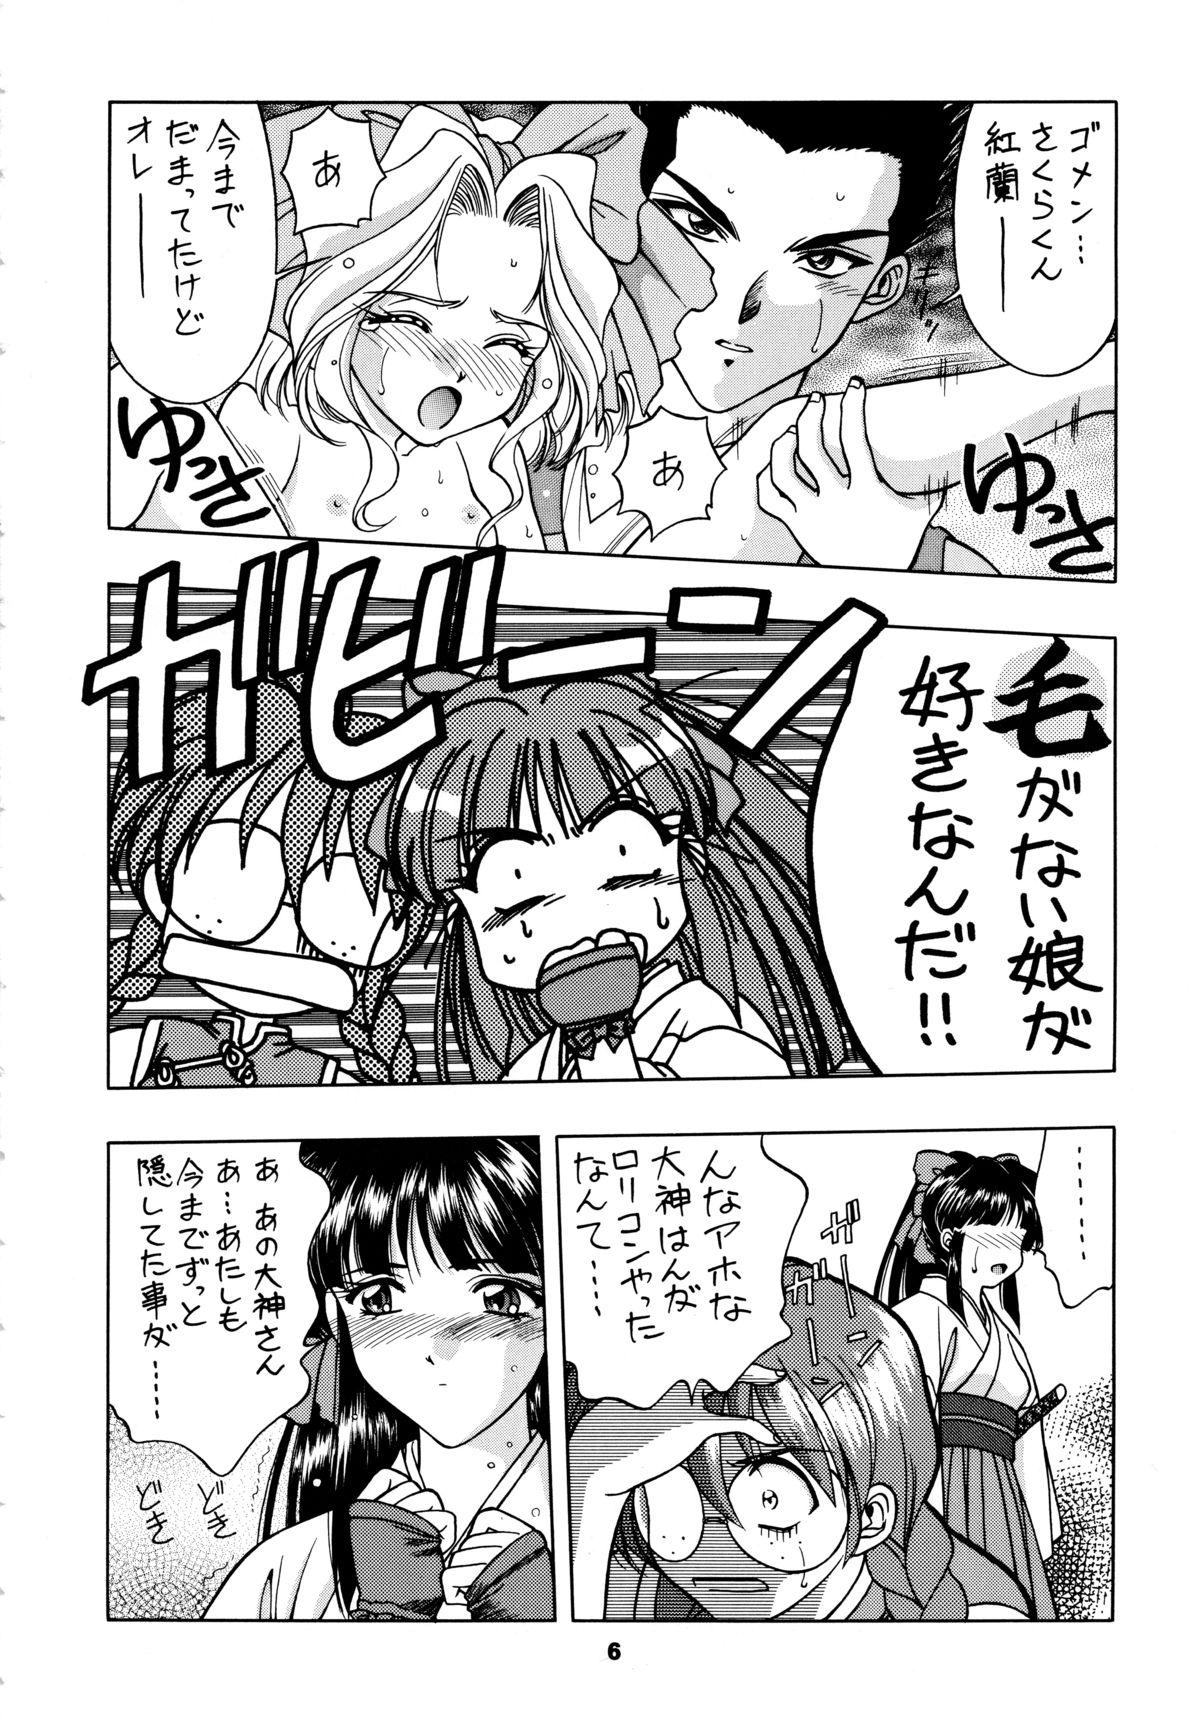 Sloppy LOVE² BREATH - Sakura taisen Martian successor nadesico Tokimeki memorial Youre under arrest Gagging - Page 6